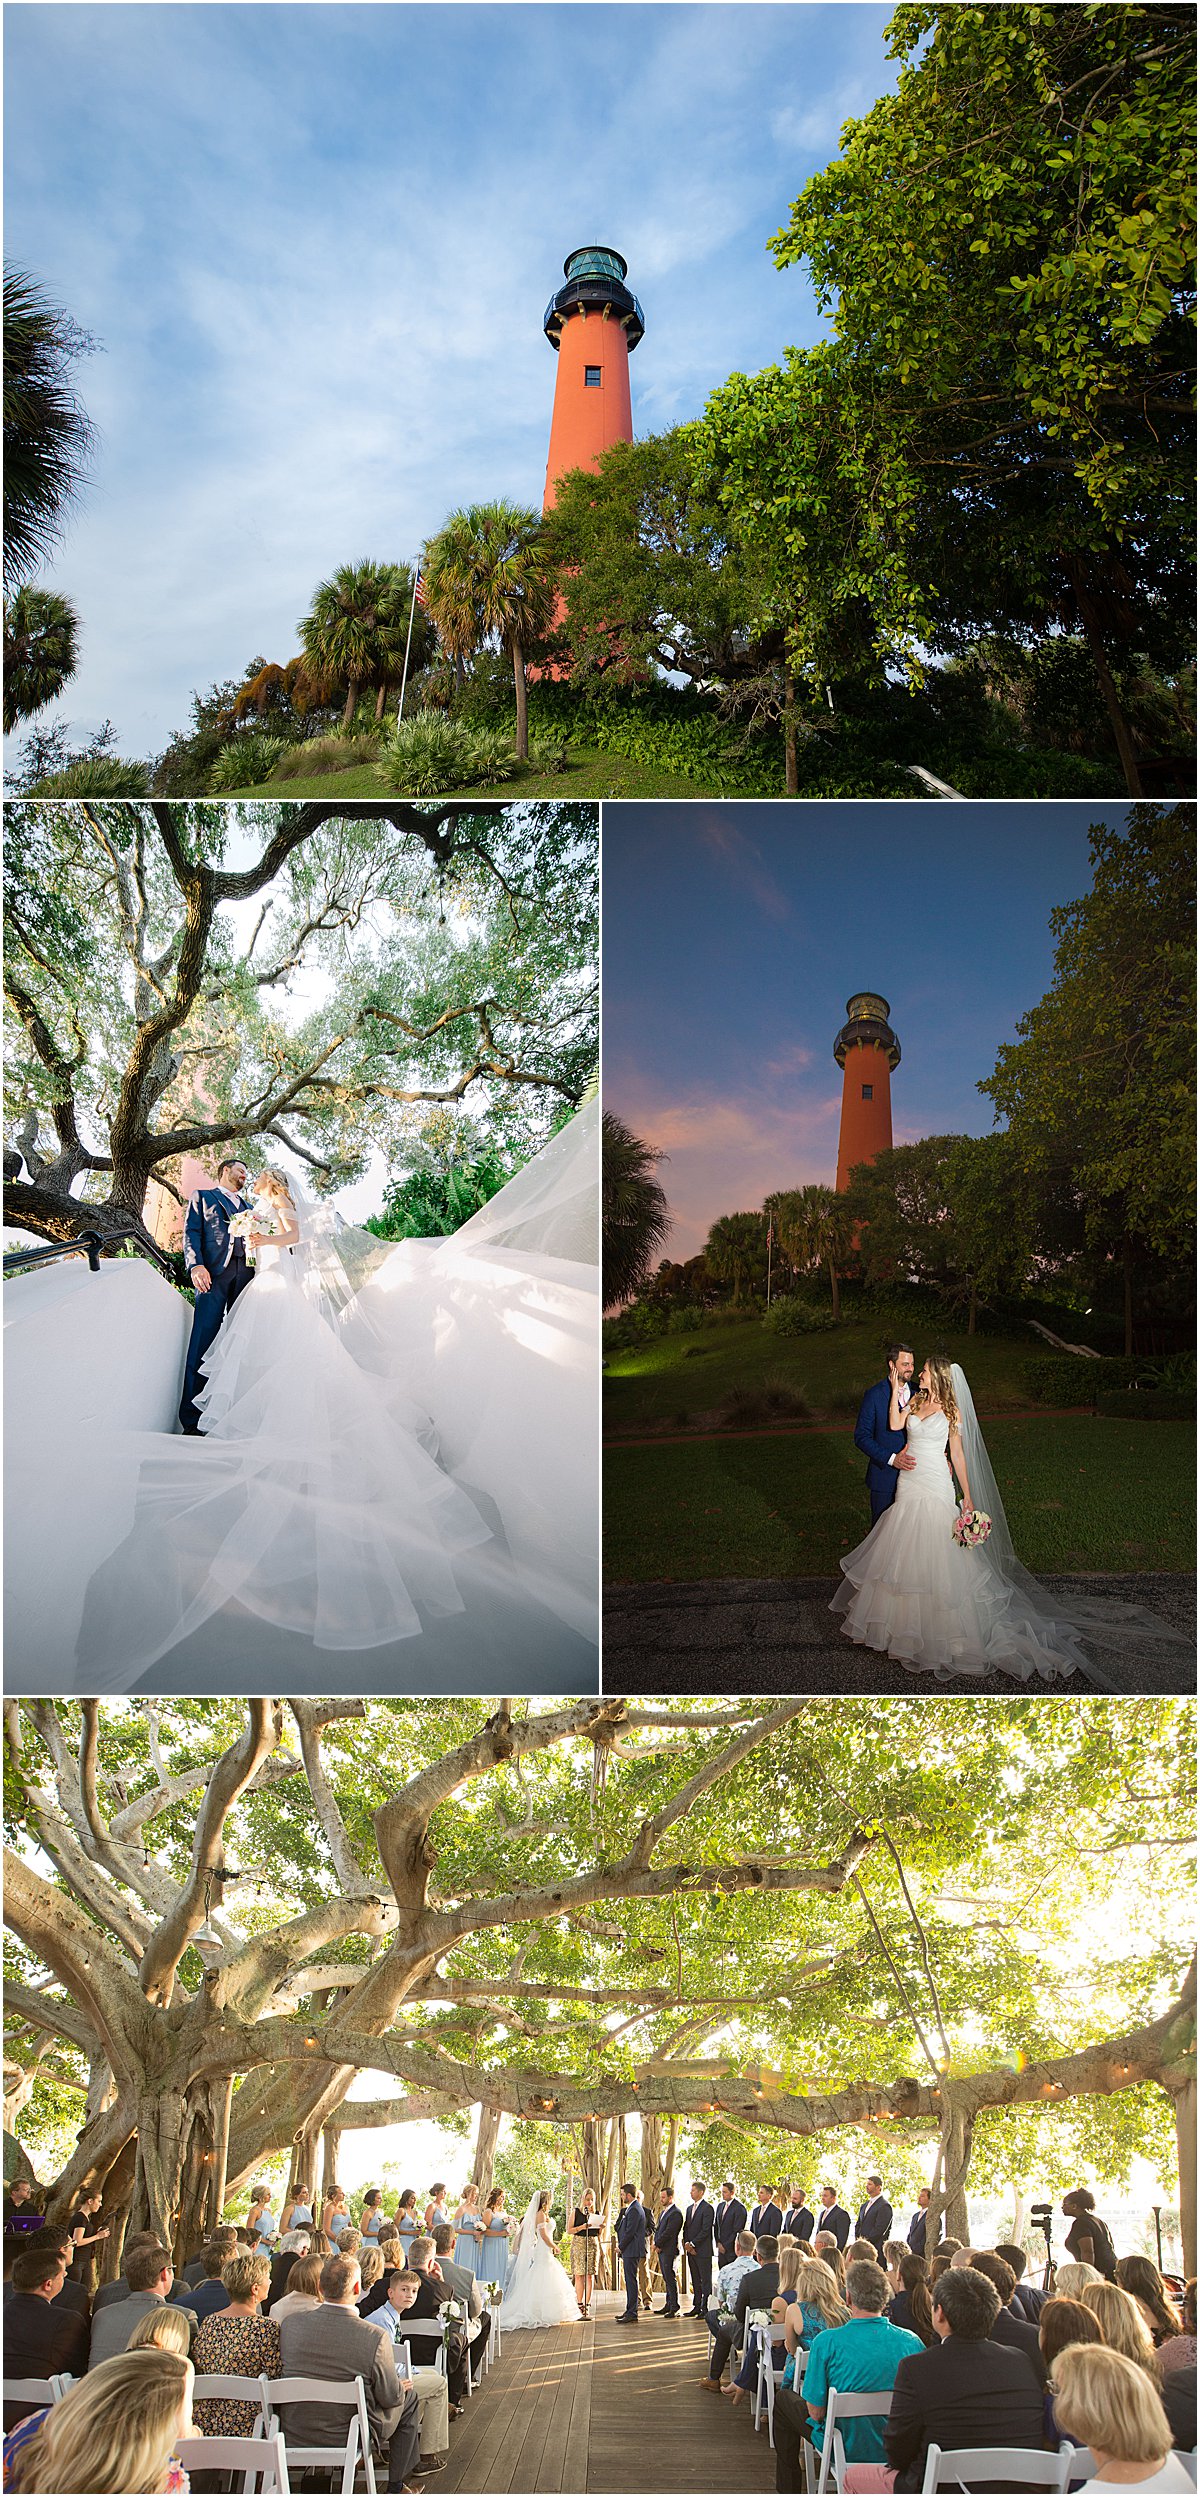 Jupiter Lighthouse | Top Palm Beach Wedding Venue | Married in Palm Beach | www.marriedinpalmbeach.com | Captured Beauty Photography